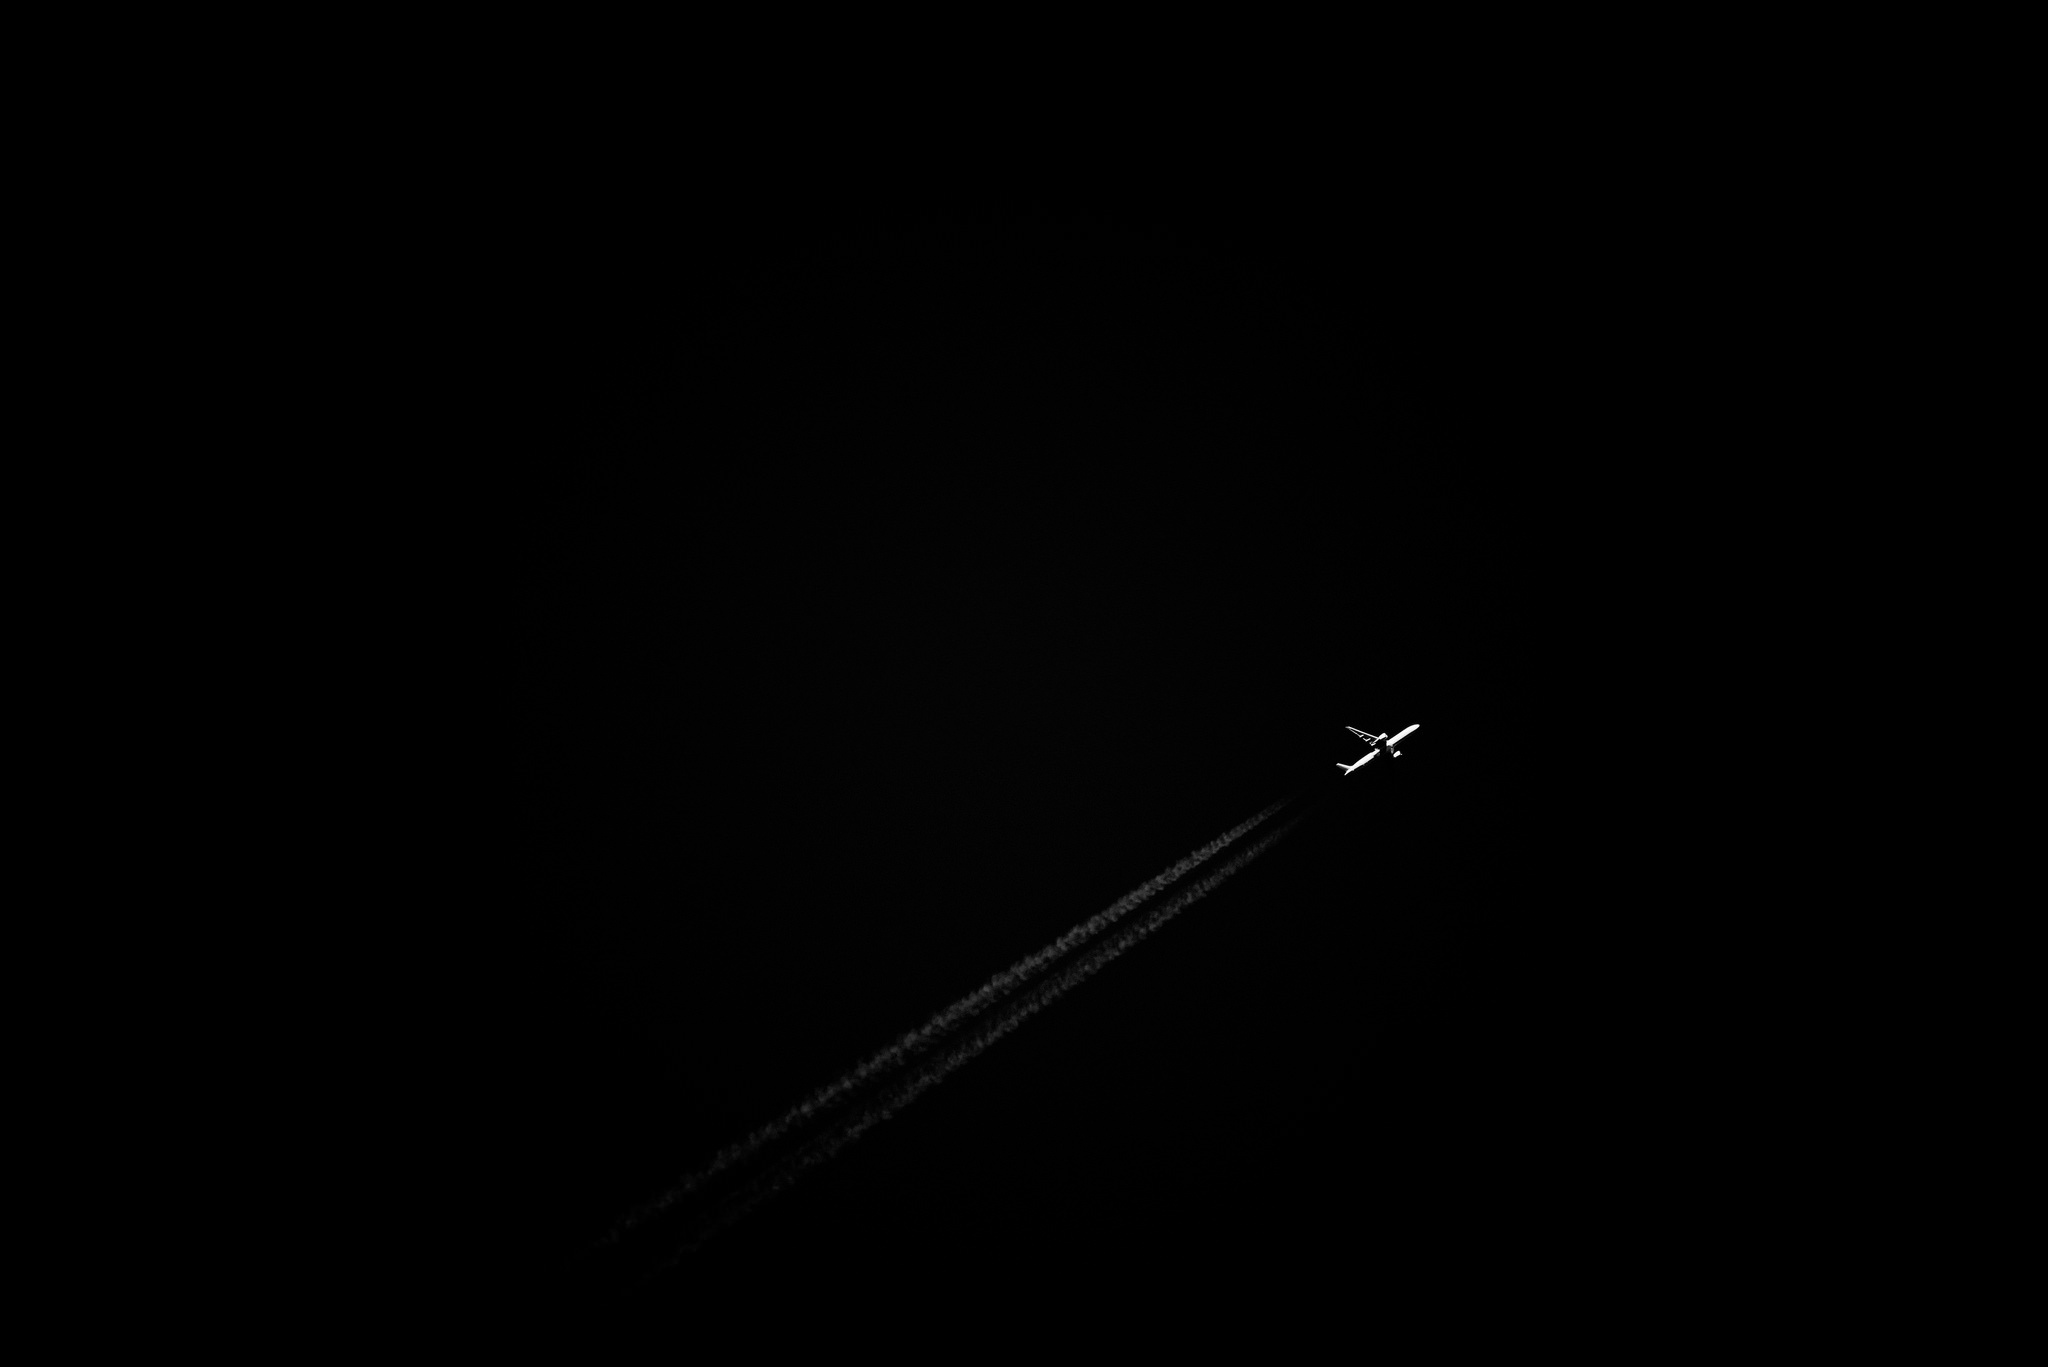 General 2048x1367 dark minimalism vehicle aircraft black black background contrails airplane